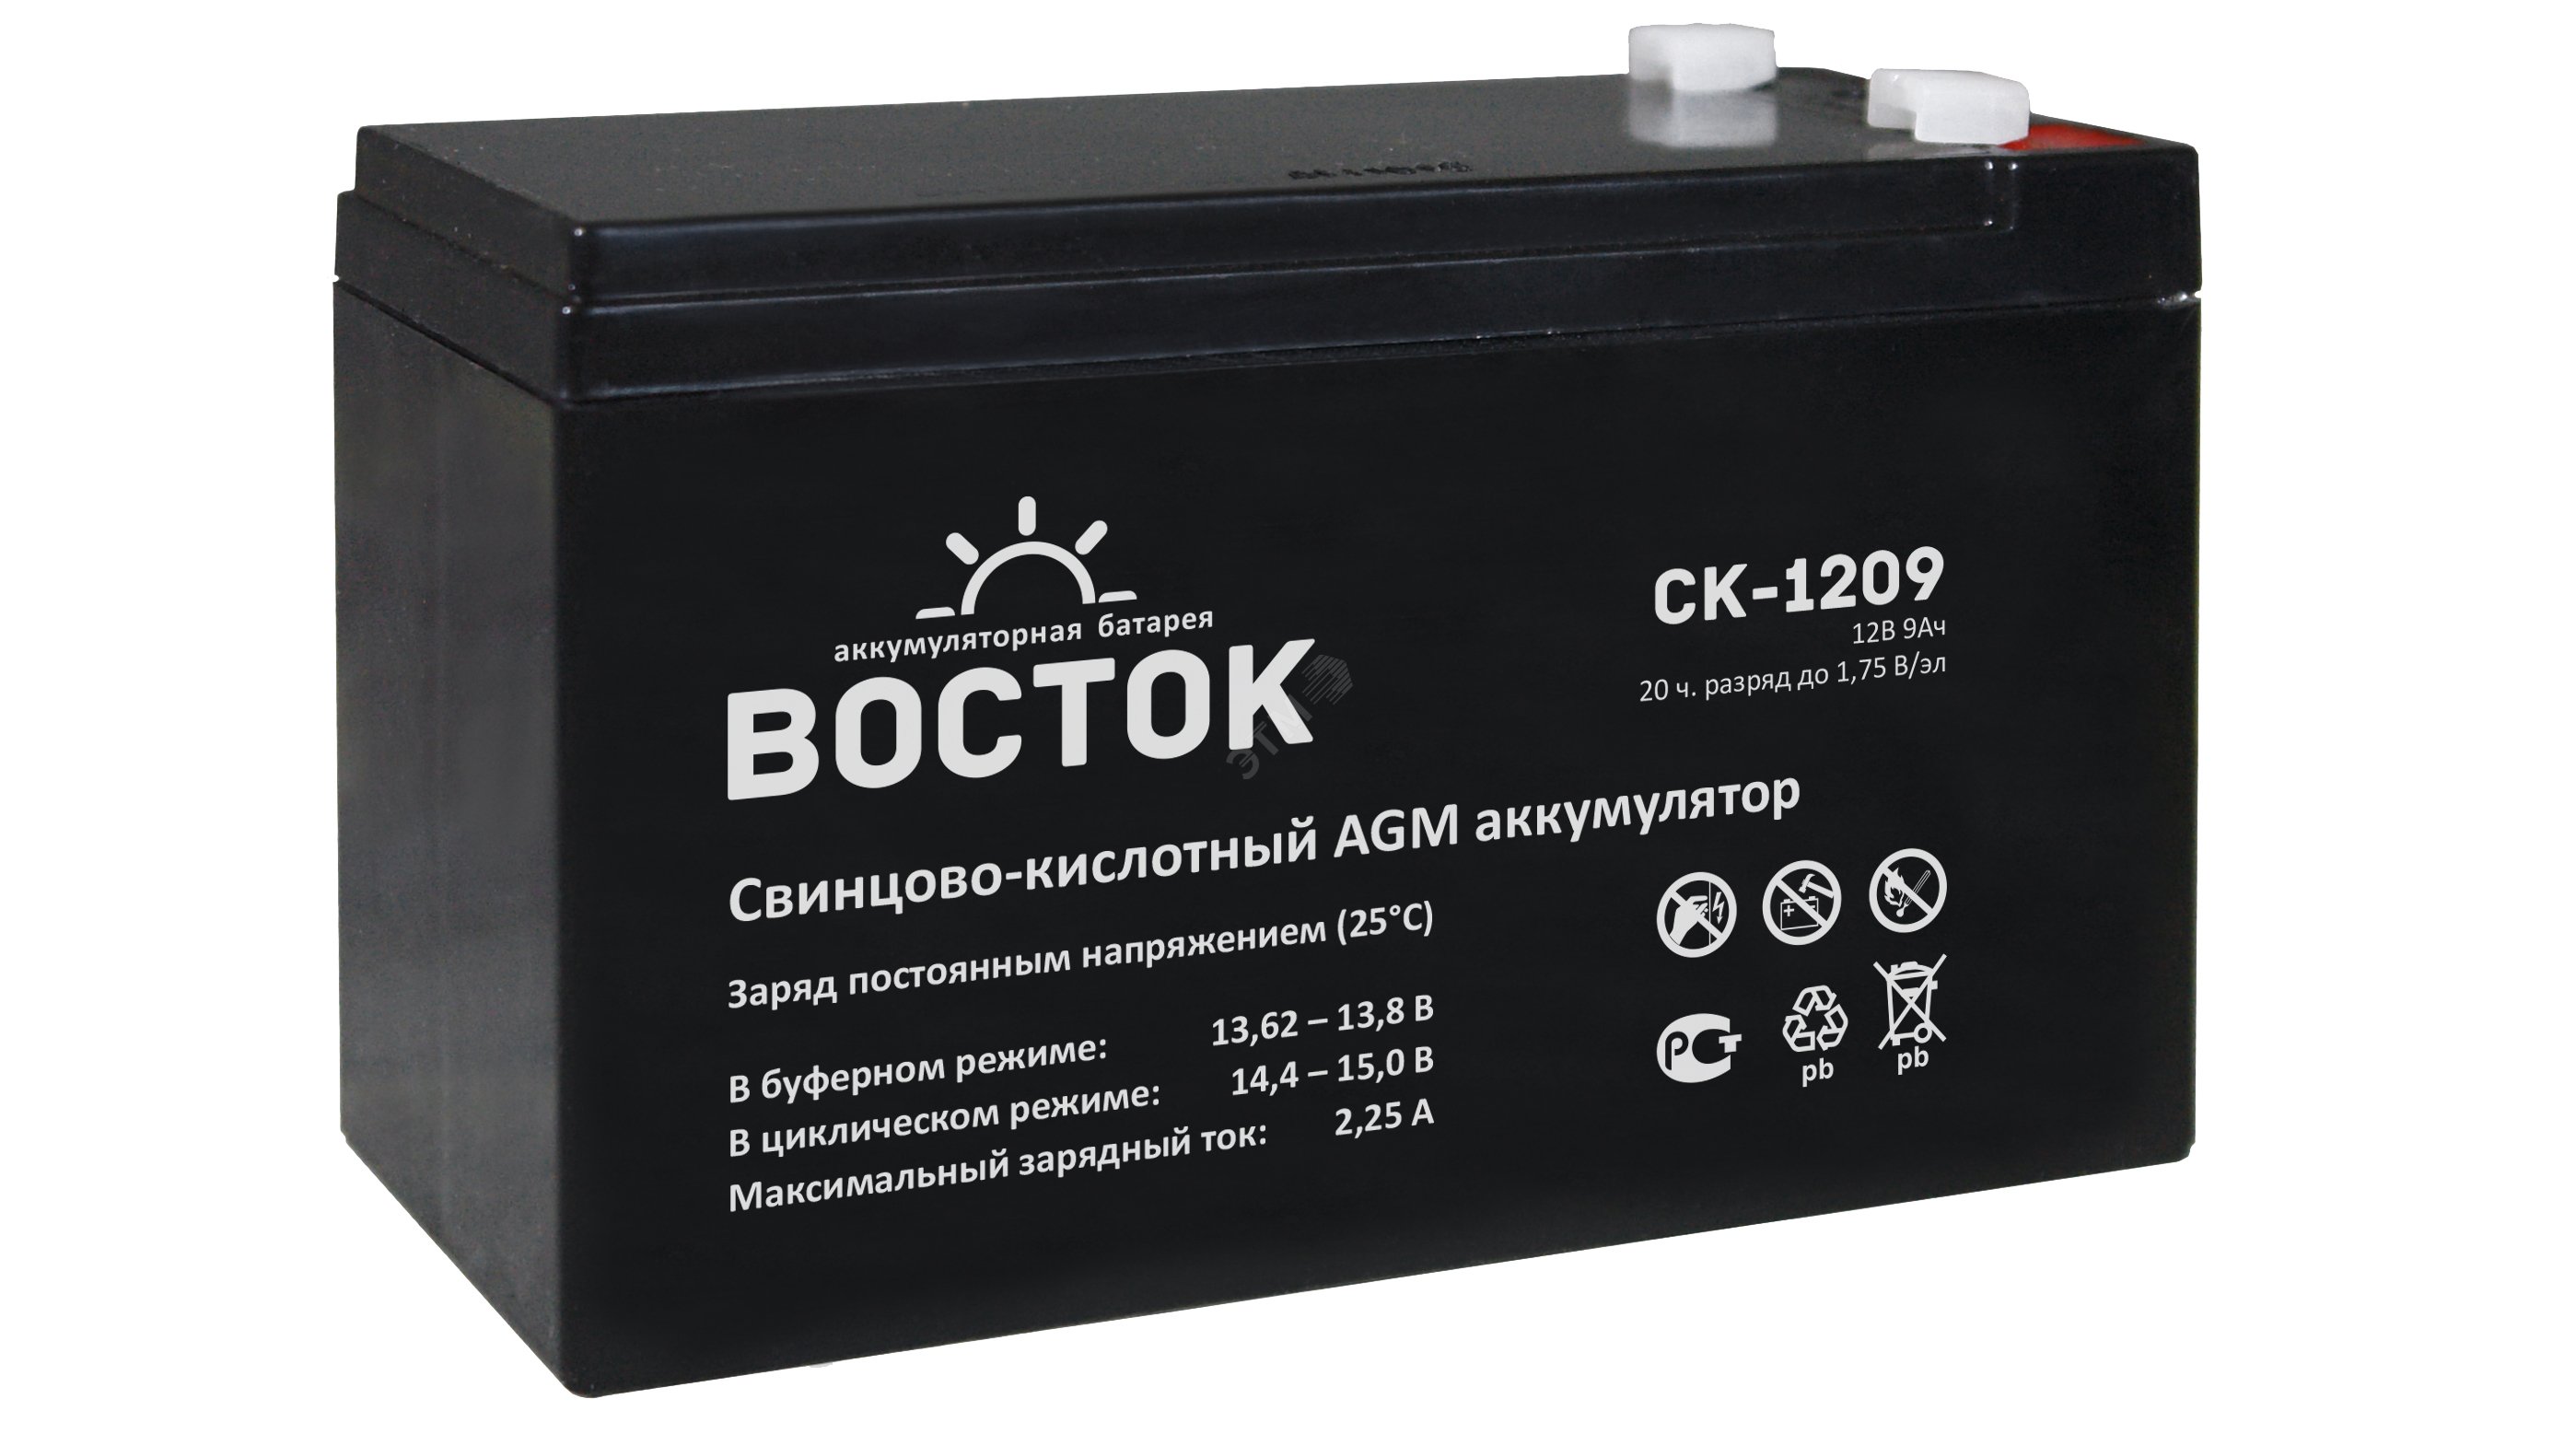 Стационарные кислотные батареи. Батарея Optimus op 1207 12/07.